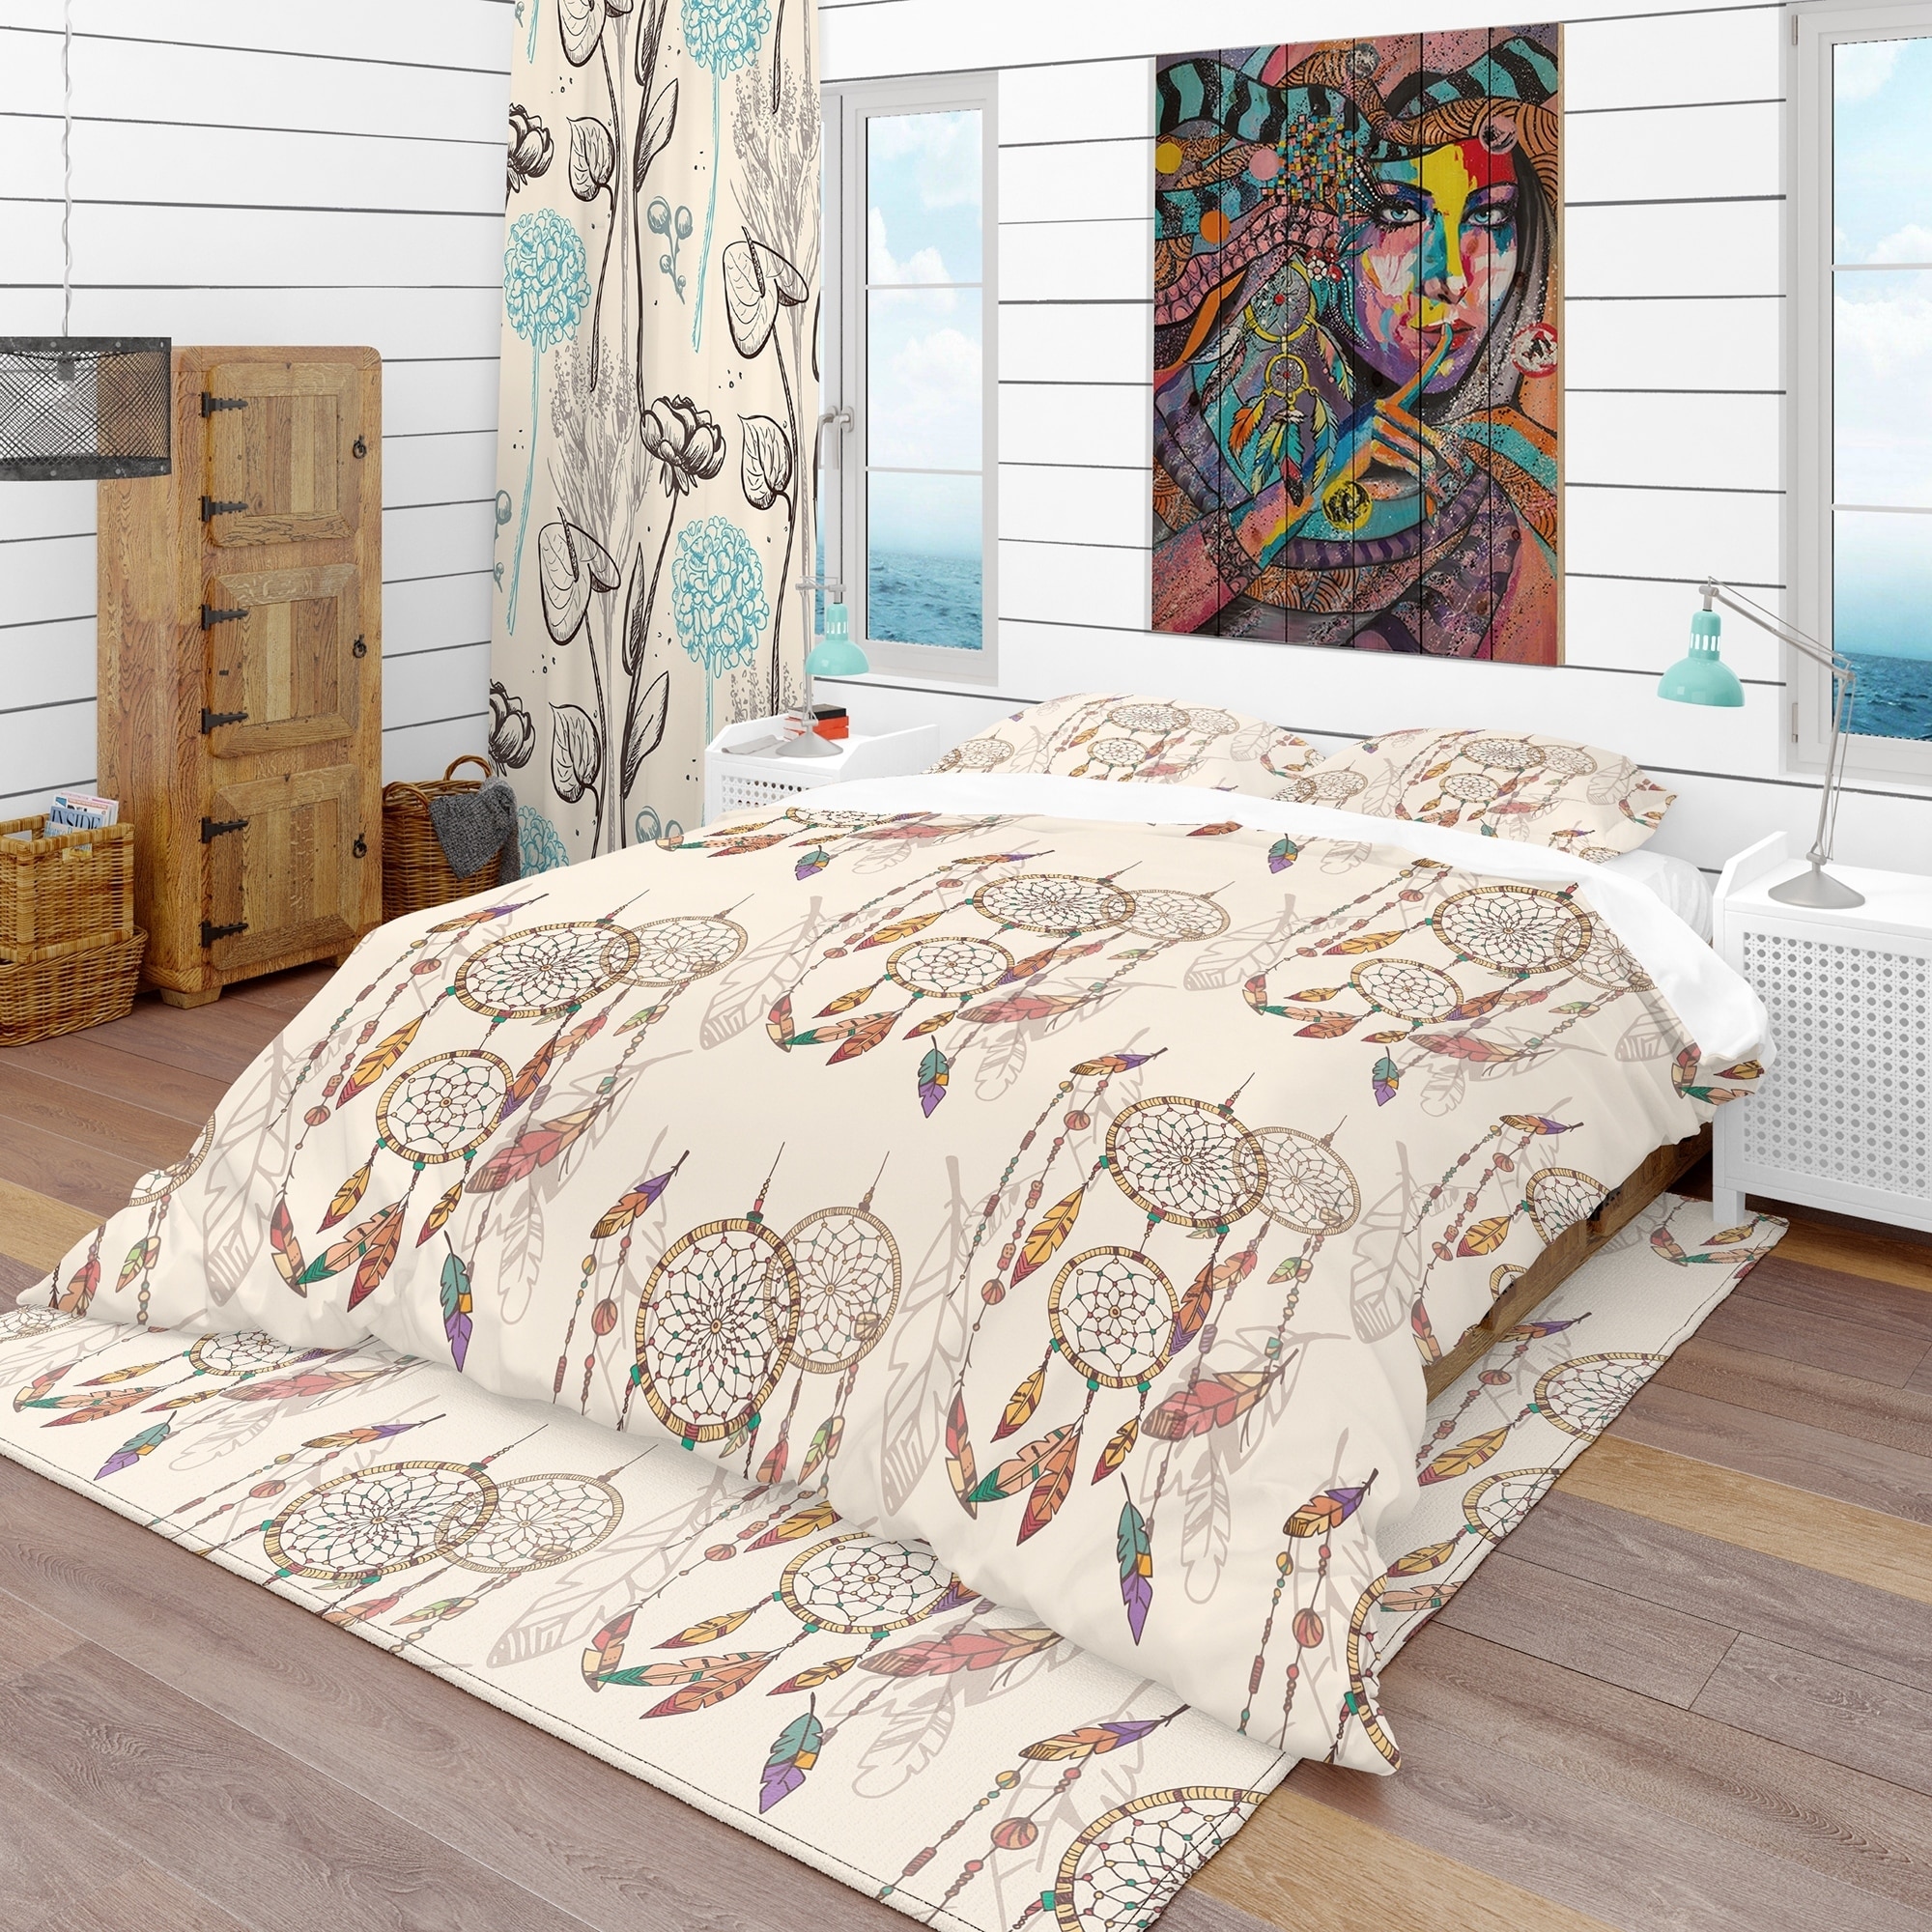 Queen Duvet Cover Abstract Art Duvet King Size Duvet Boho Bedding Luxury Bedding Colorful Bed Cover Artistic Bedding Designer Bedding